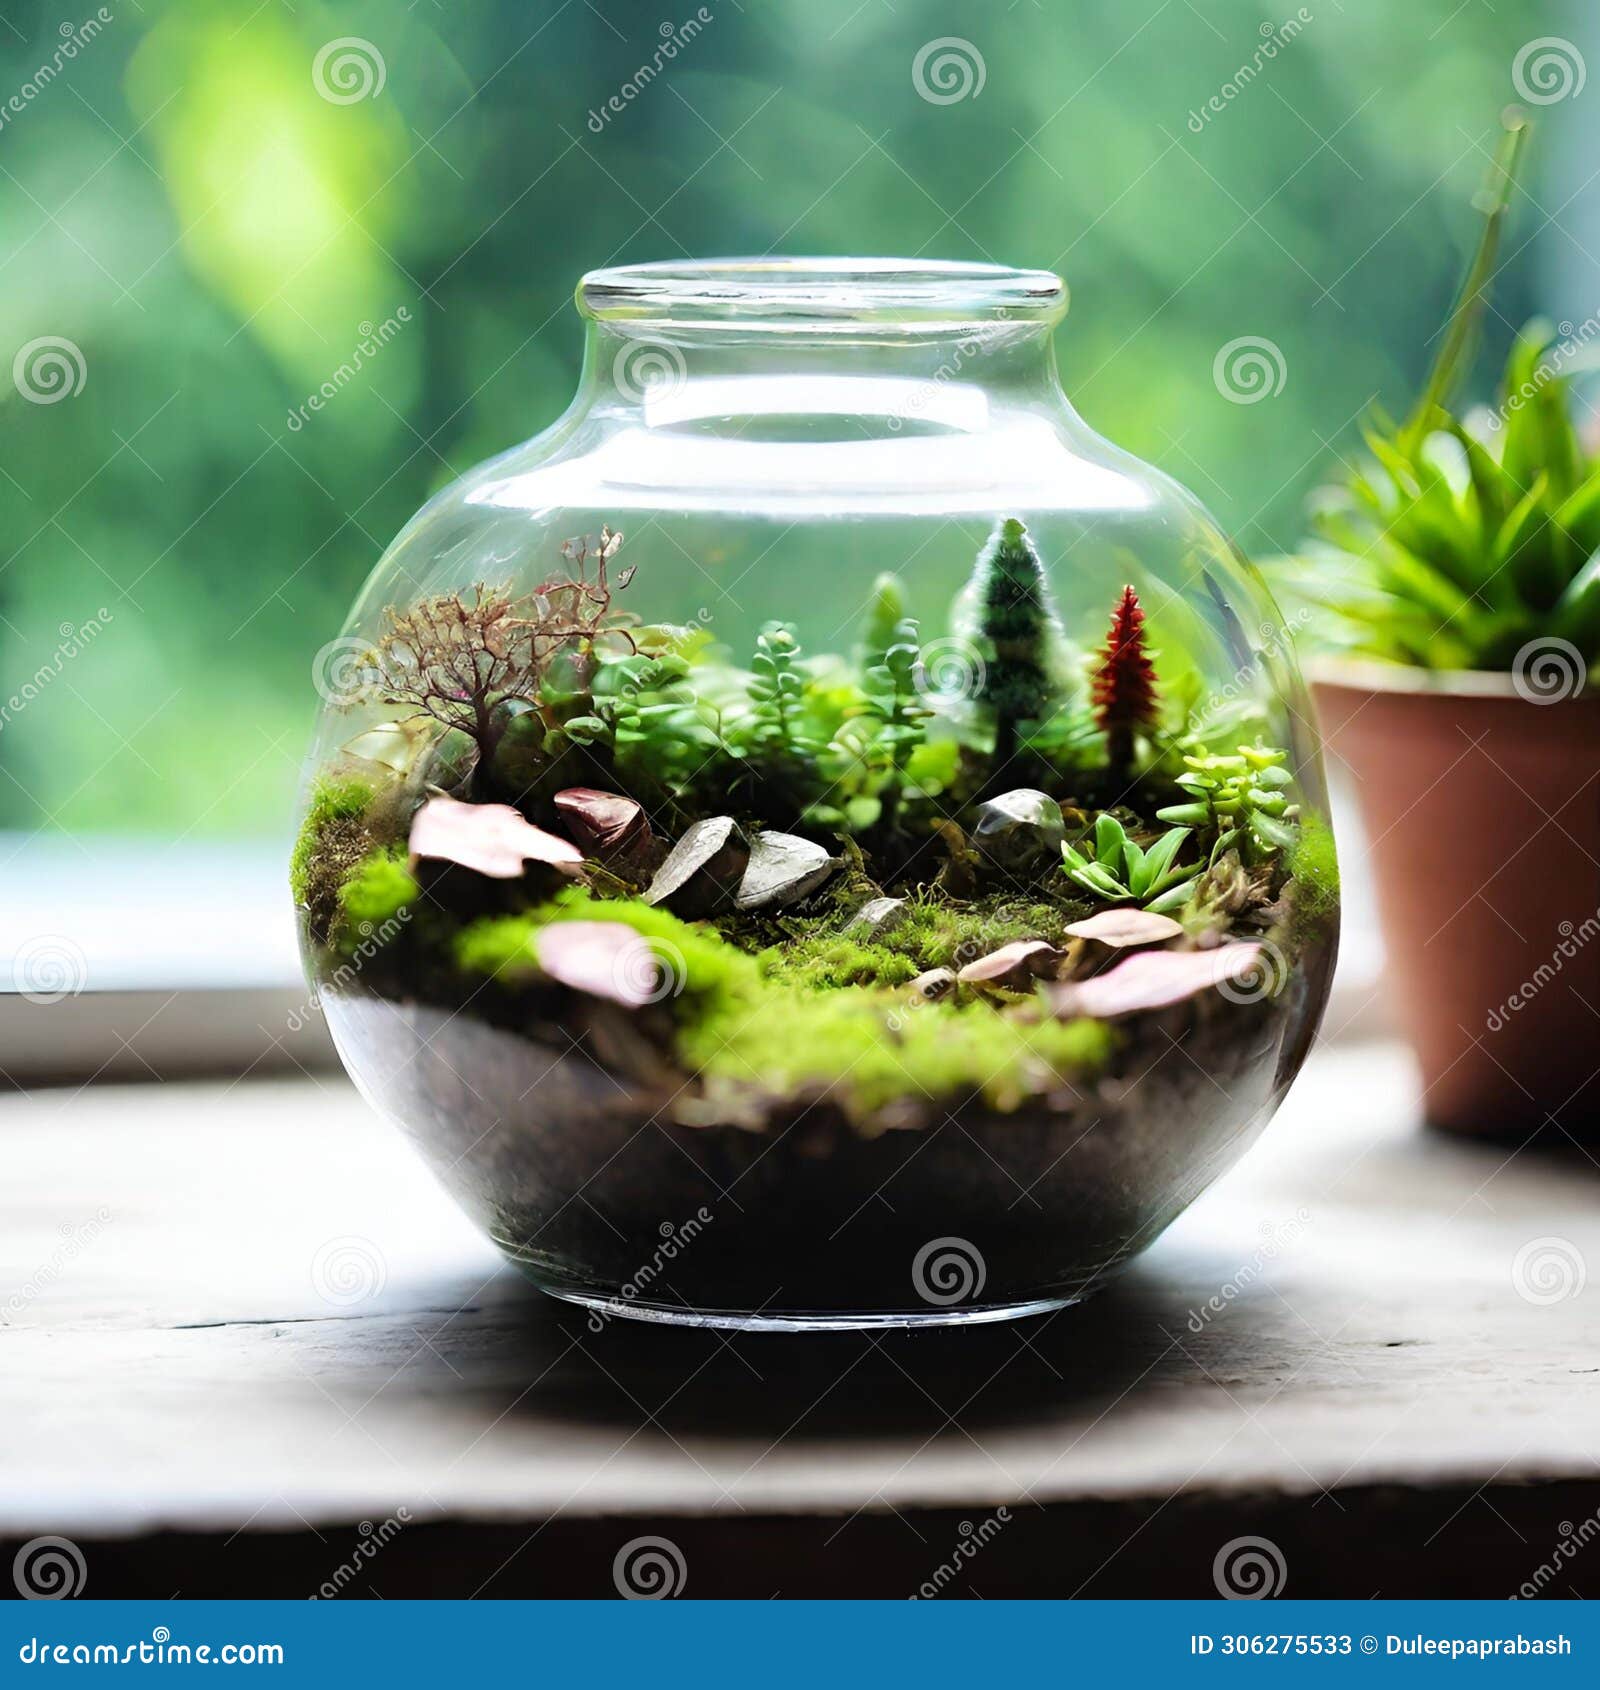 https://thumbs.dreamstime.com/z/terrarium-jar-little-forest-self-ecosystem-small-decoration-plants-glass-bowl-ai-generated-illustration-306275533.jpg